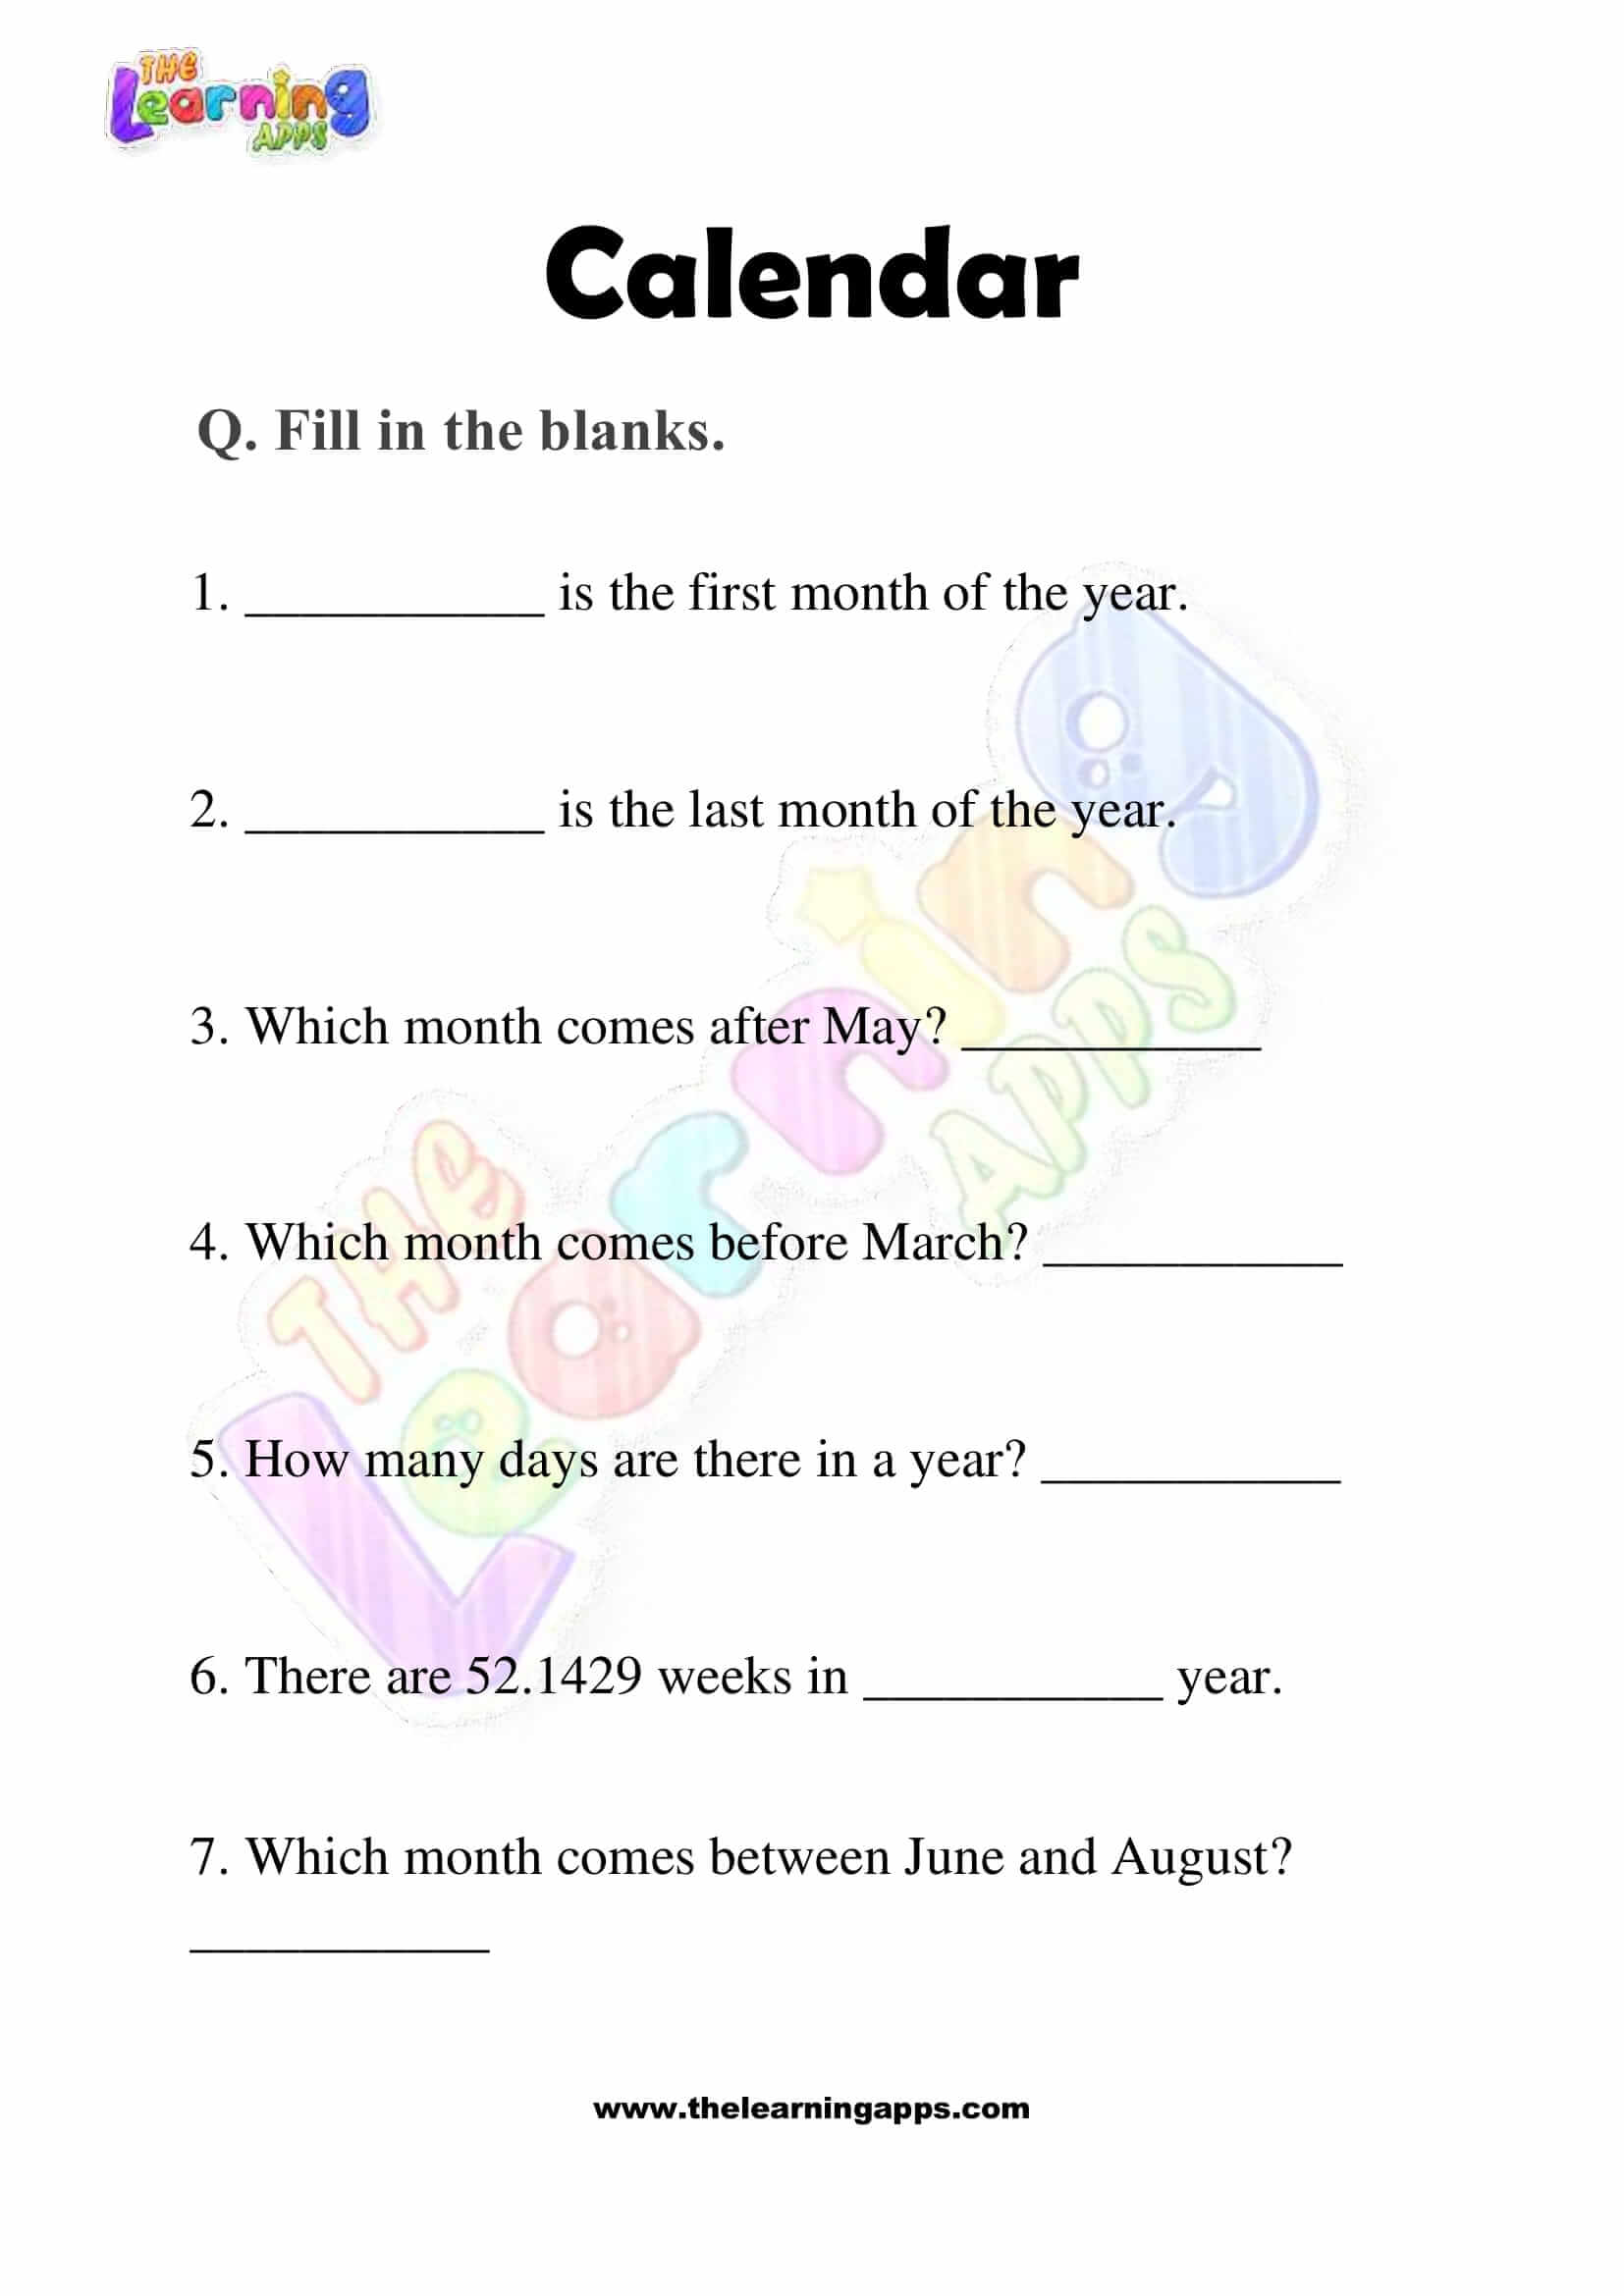 Calendar-Worksheets-Grade-3-Activity-1